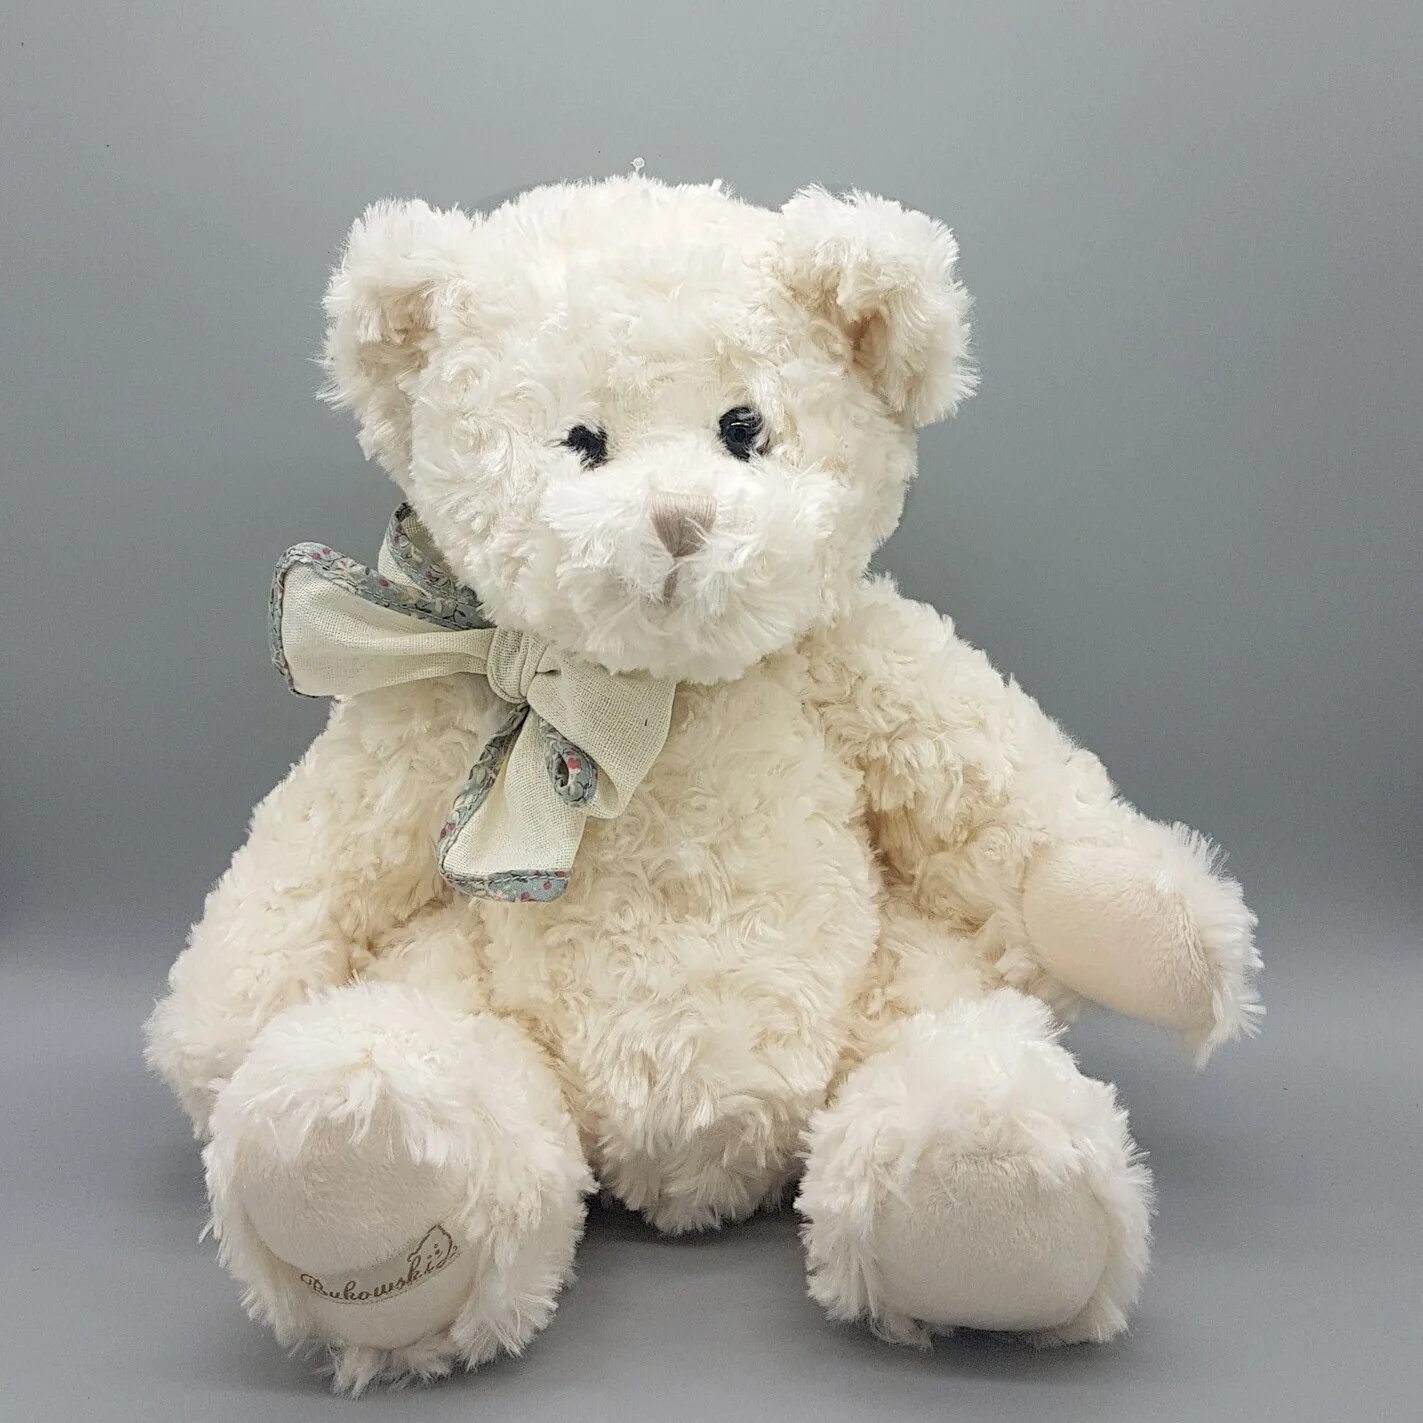 Тедди белый. Teddy 338. White Teddy. Плюшевый медведь. Плюшевый мишка Тедди.